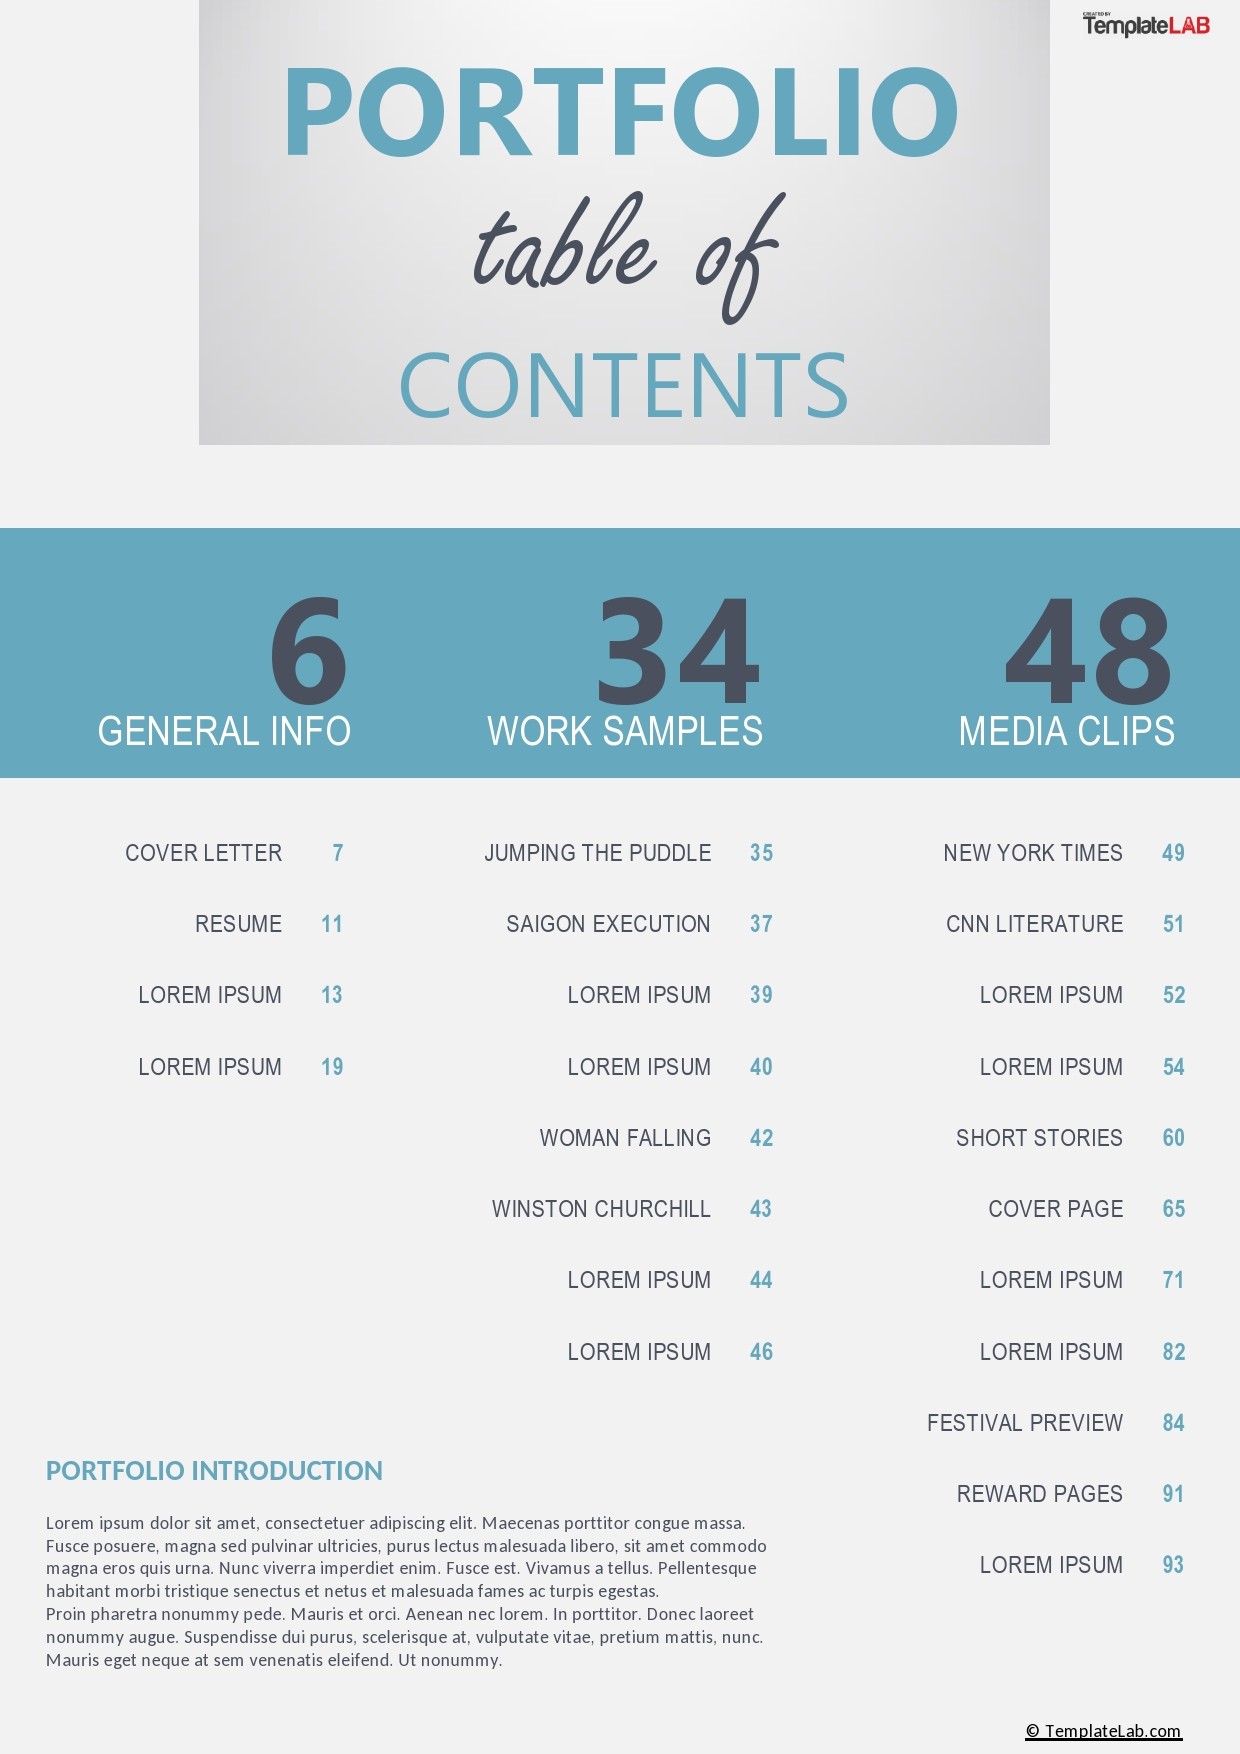 Free Portfolio Table of Contents - TemplateLab.com